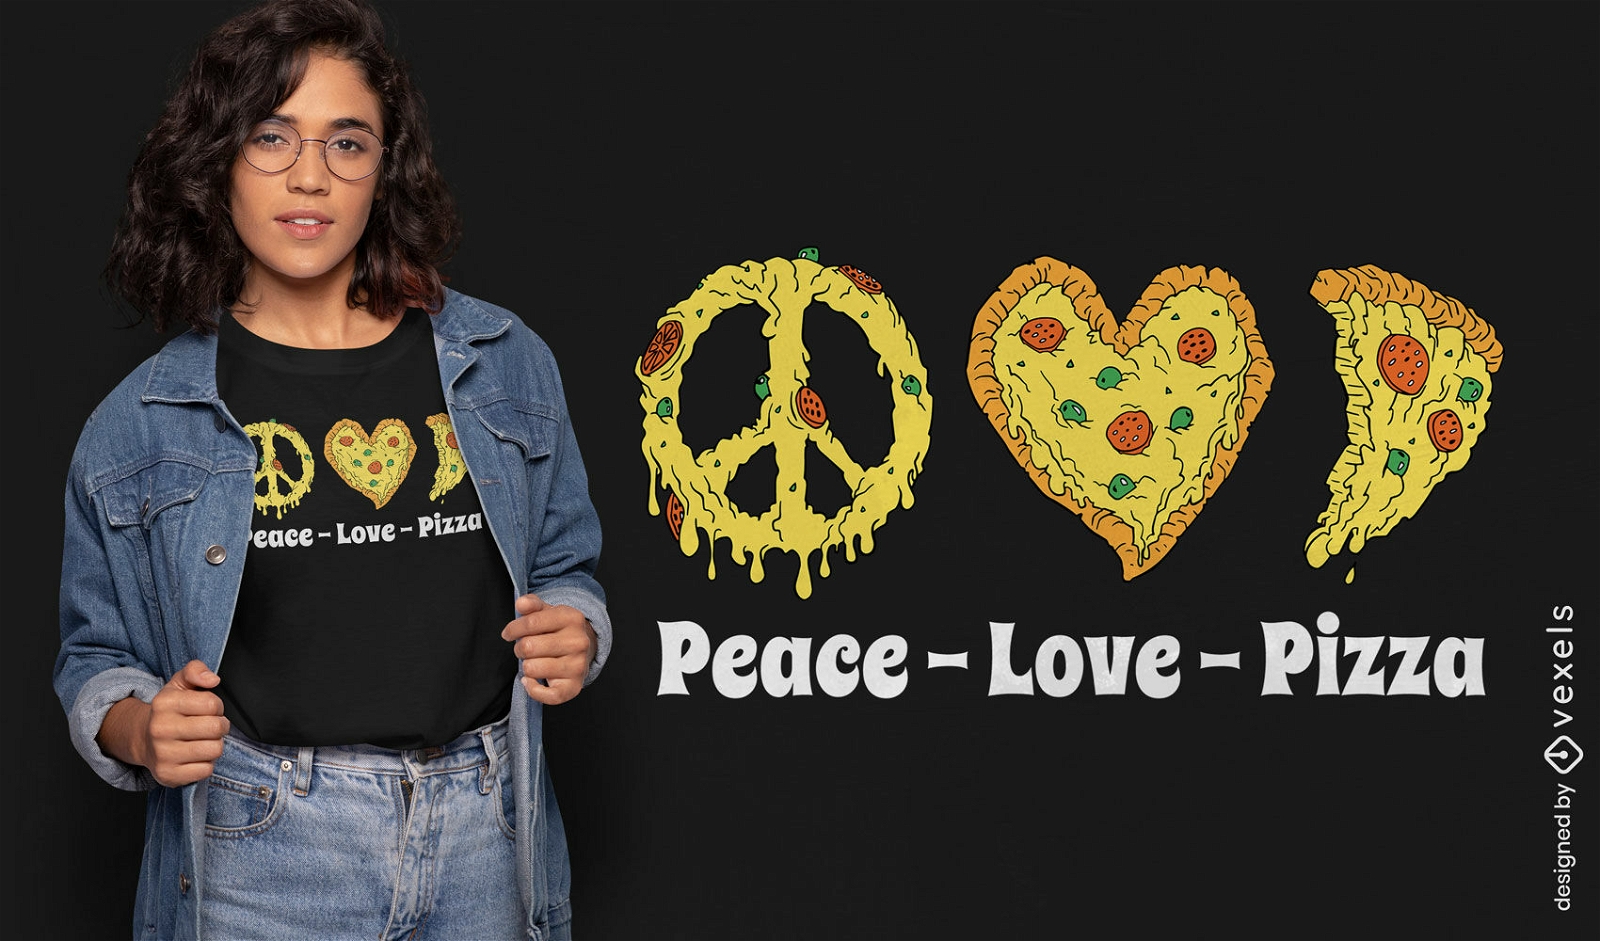 Dise?o de camiseta de pizza de amor de paz.